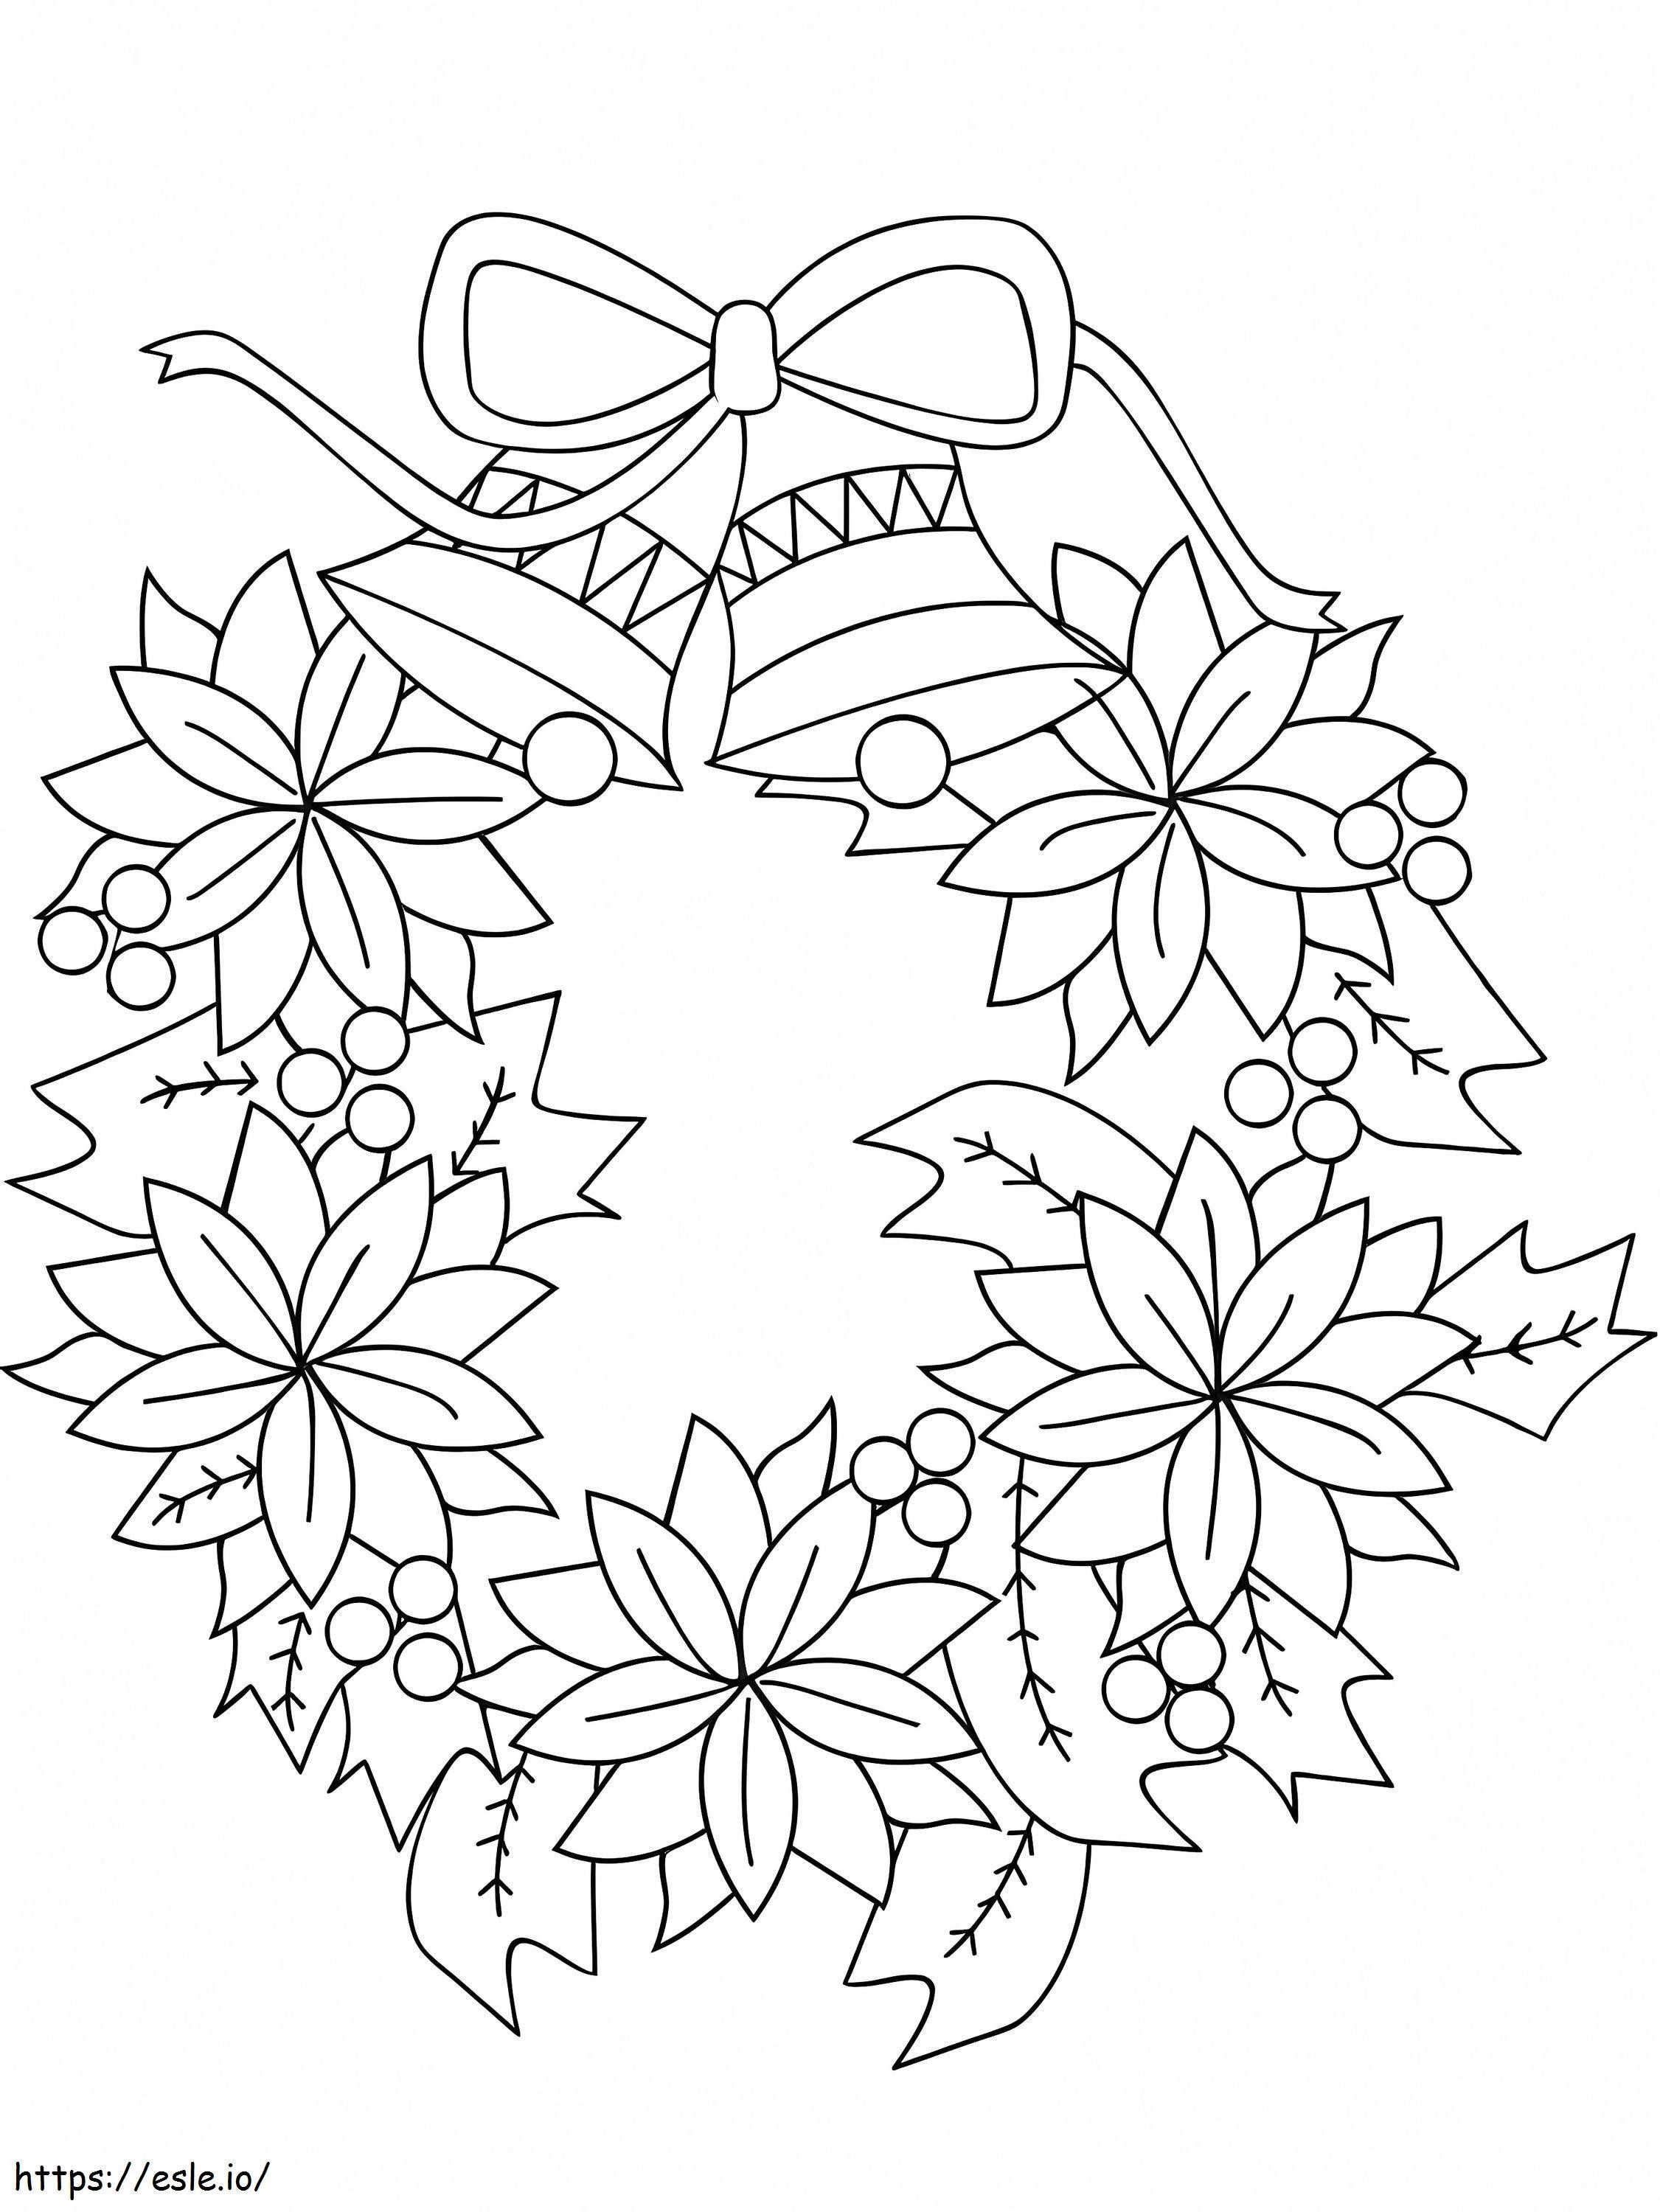 Coloriage Guirlande de Noël à imprimer dessin